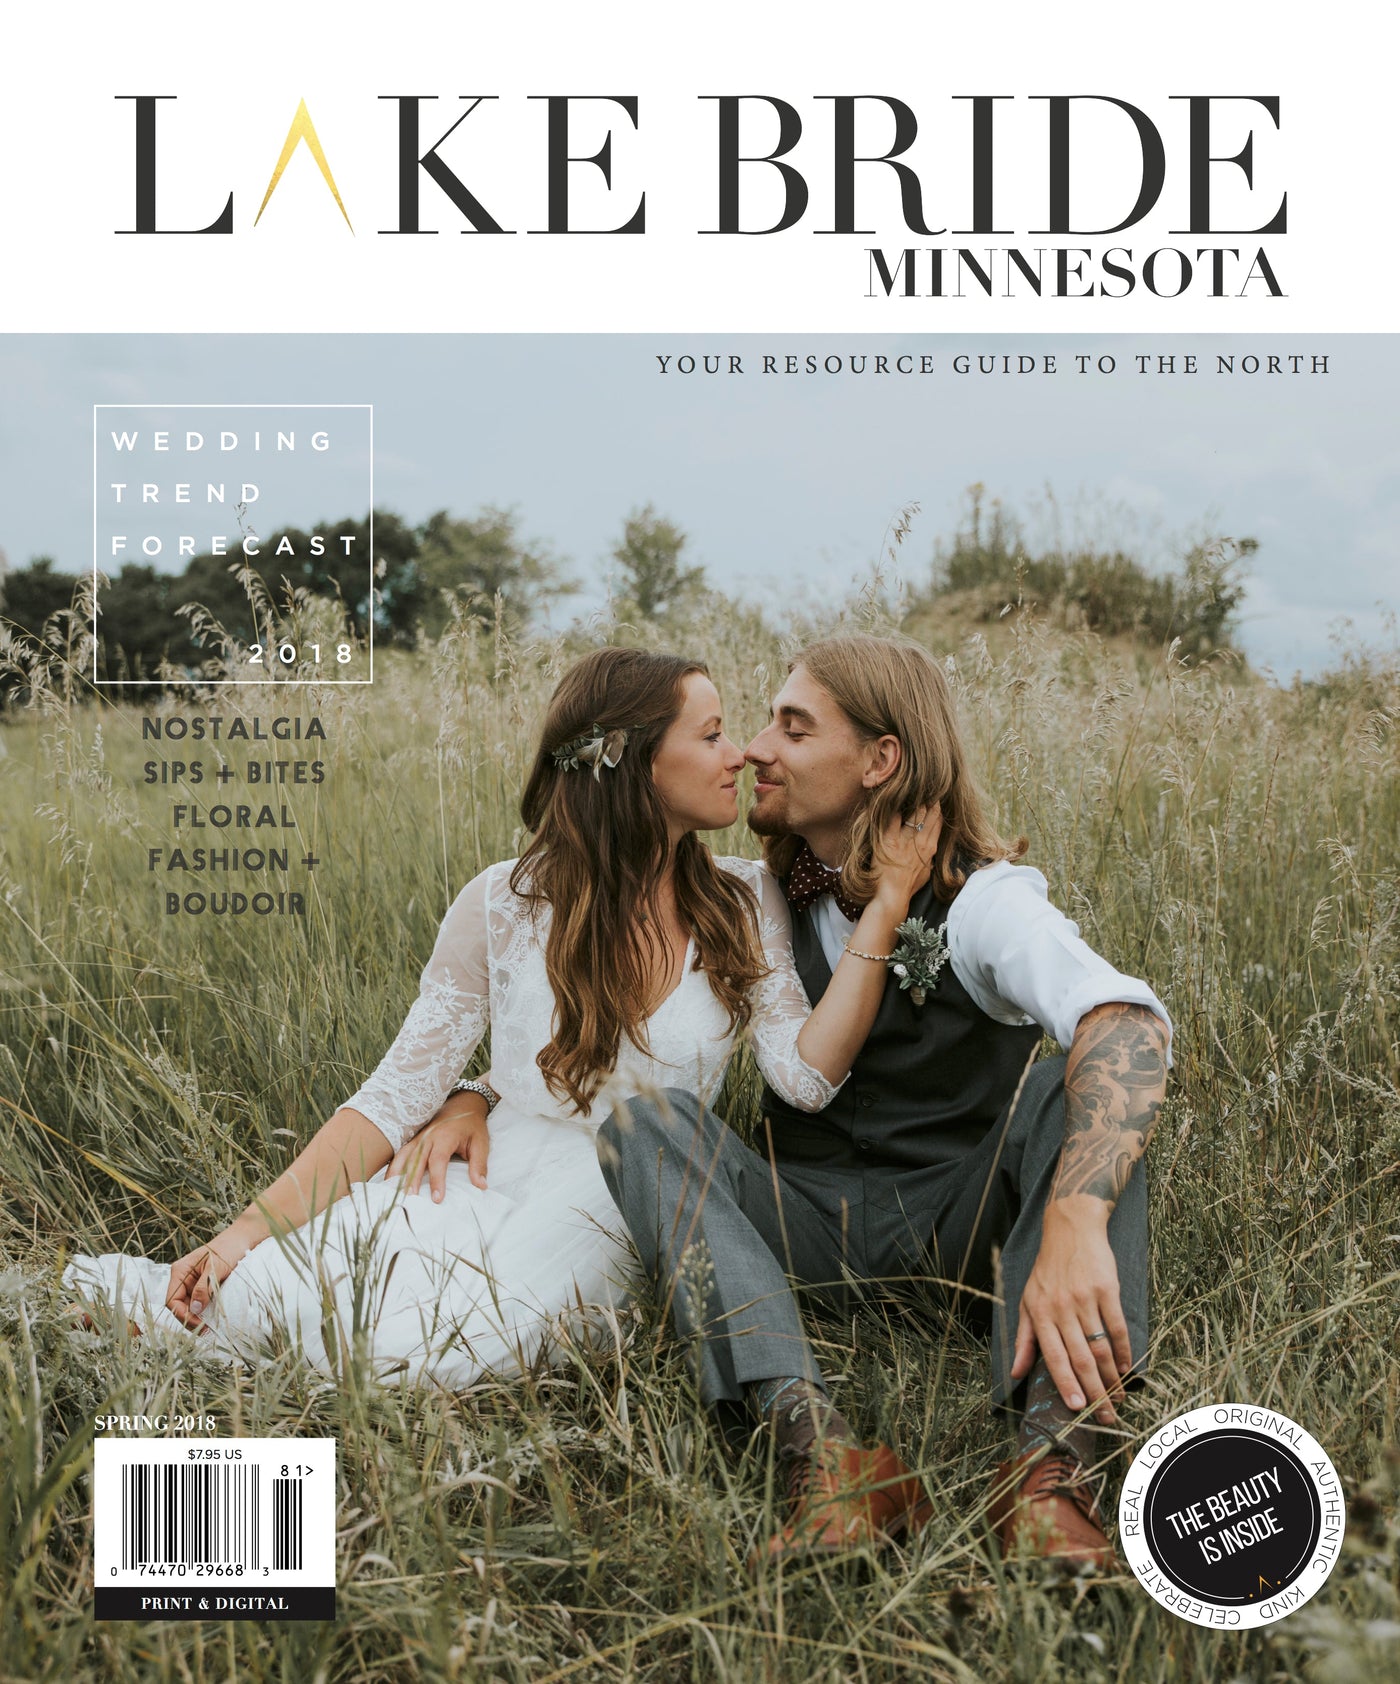 Lake Bride Magazine: Volume 3, Issue 1 - The Lake and Company